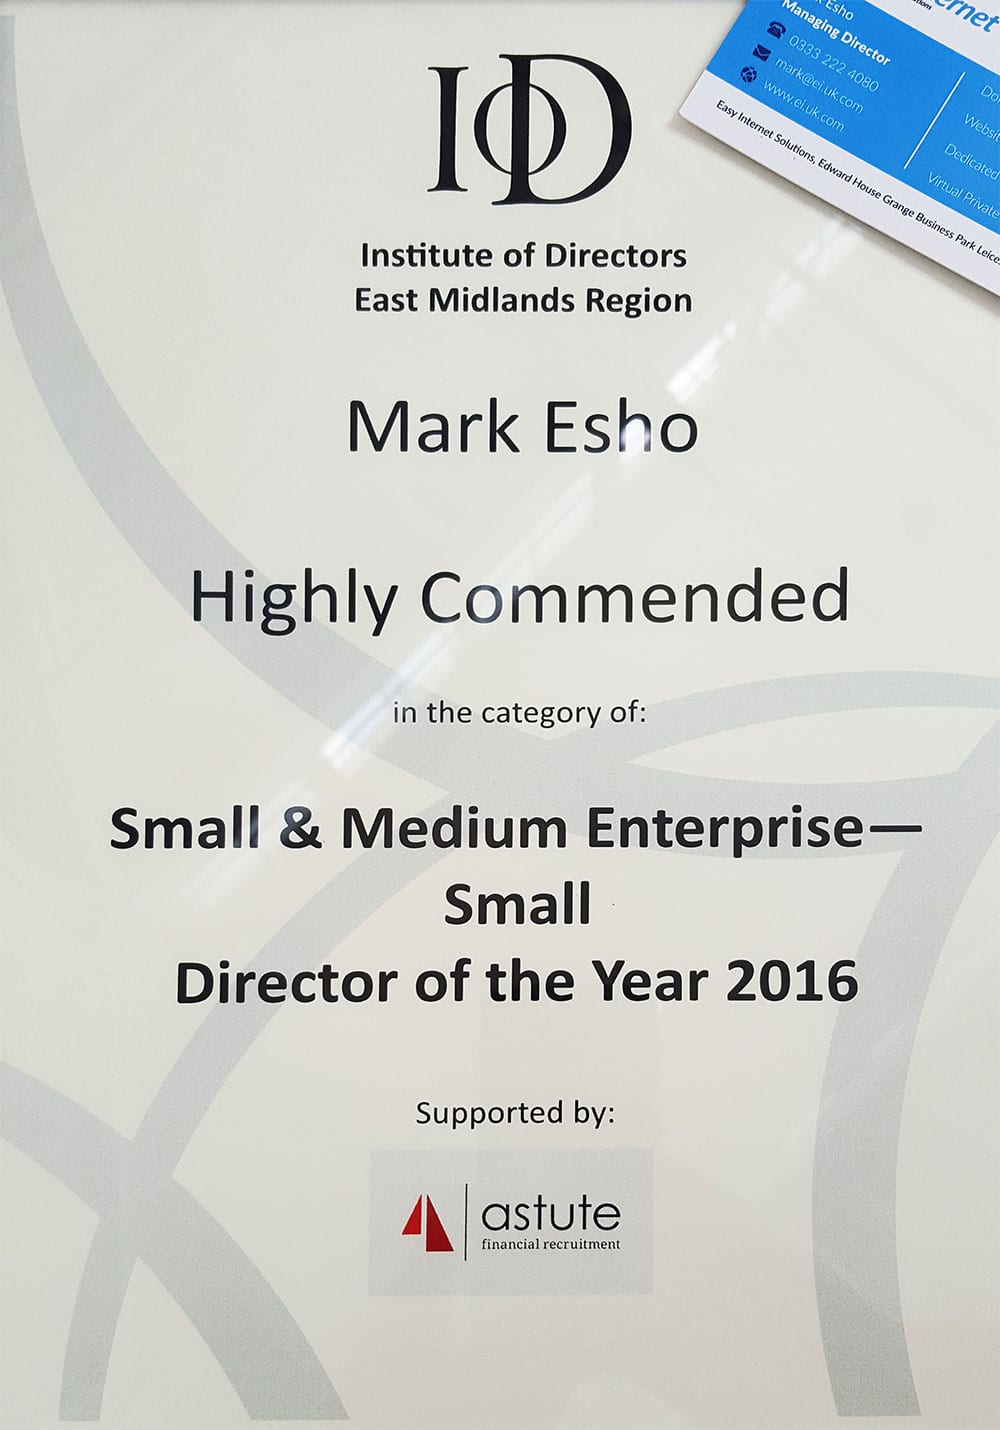 Mark Esho IoD highly commended award